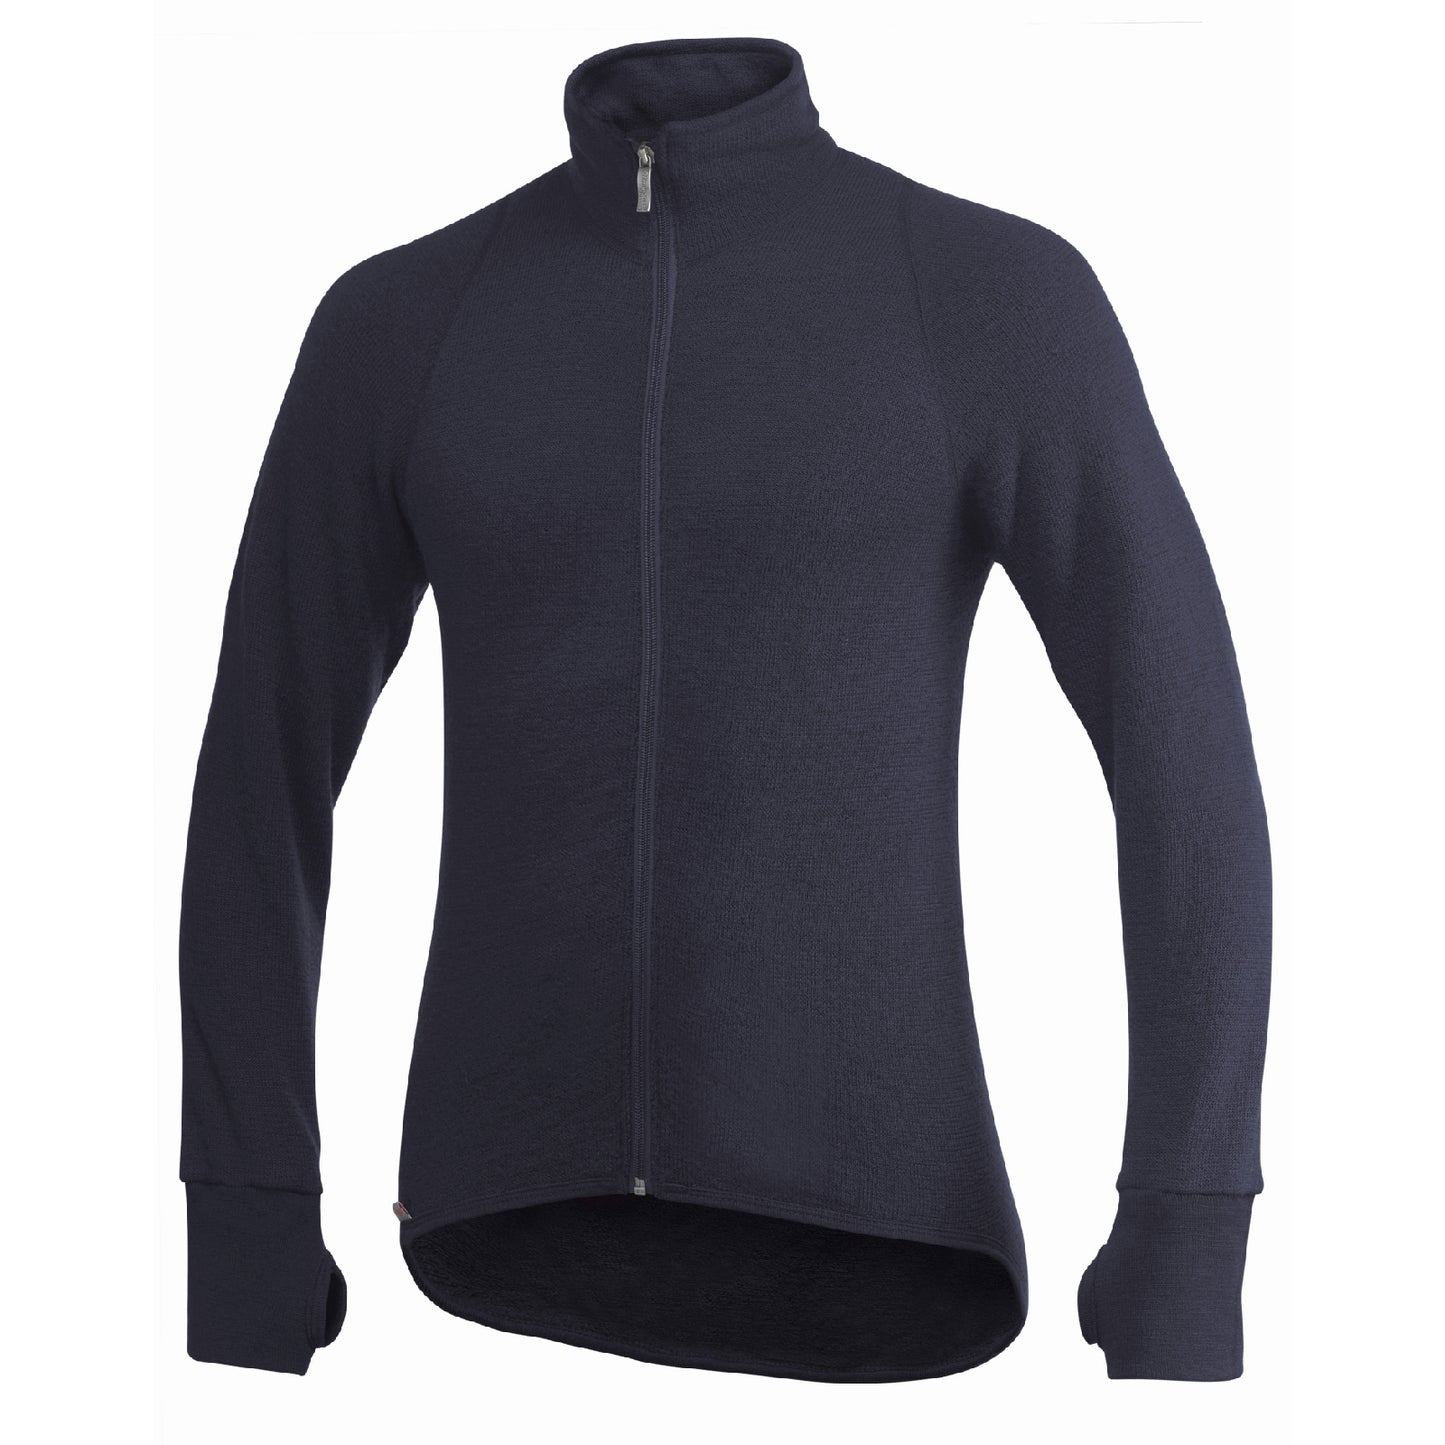 Woolpower - Full zip jacket 400 | Thermoweste aus Wolle